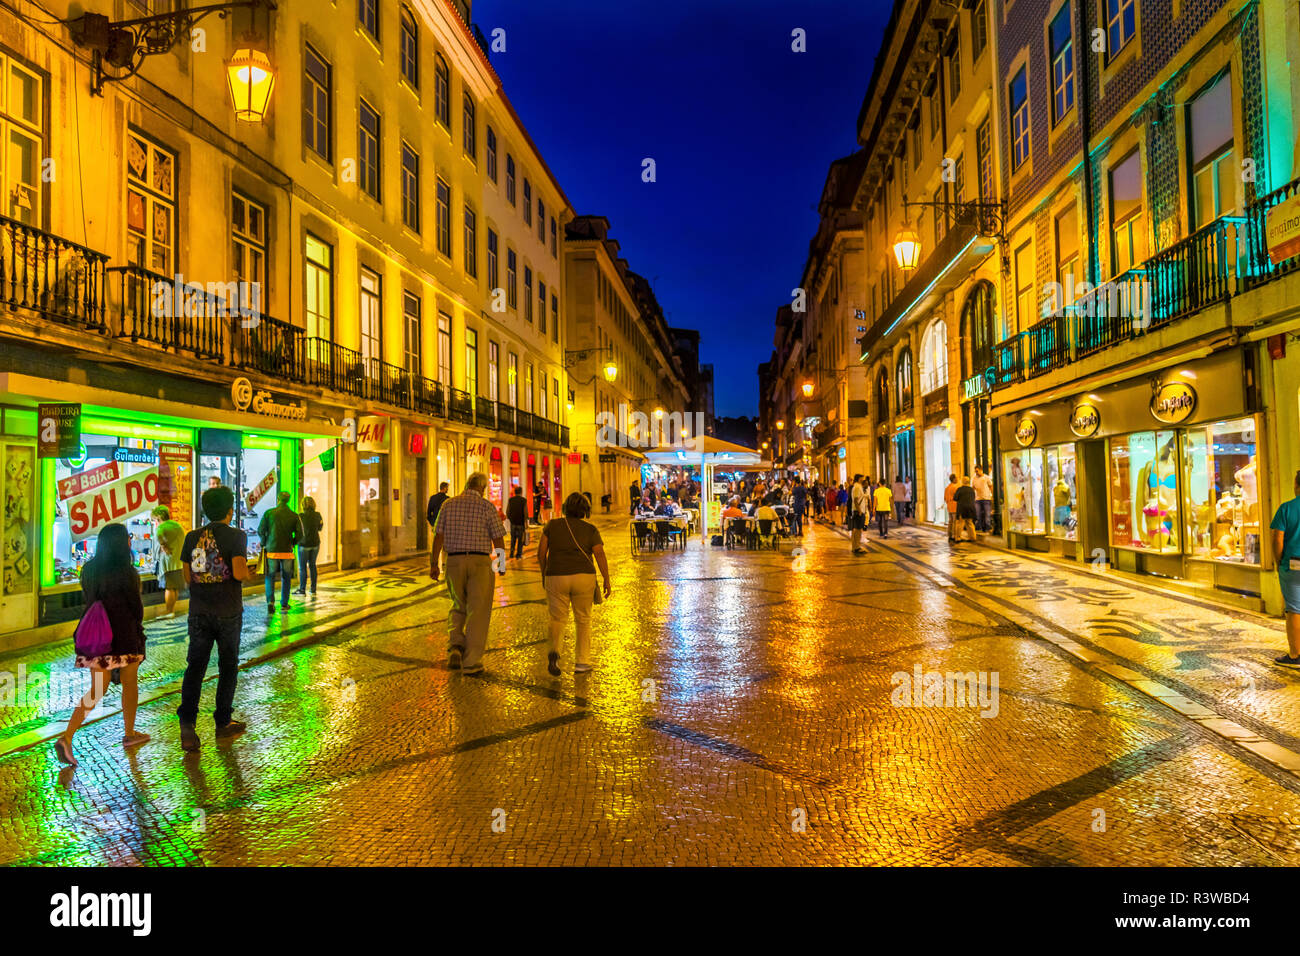 Rua Augusta, shops and restaurants, street with black and white tiles, Baixa, Lisbon, Portugal. Stock Photo